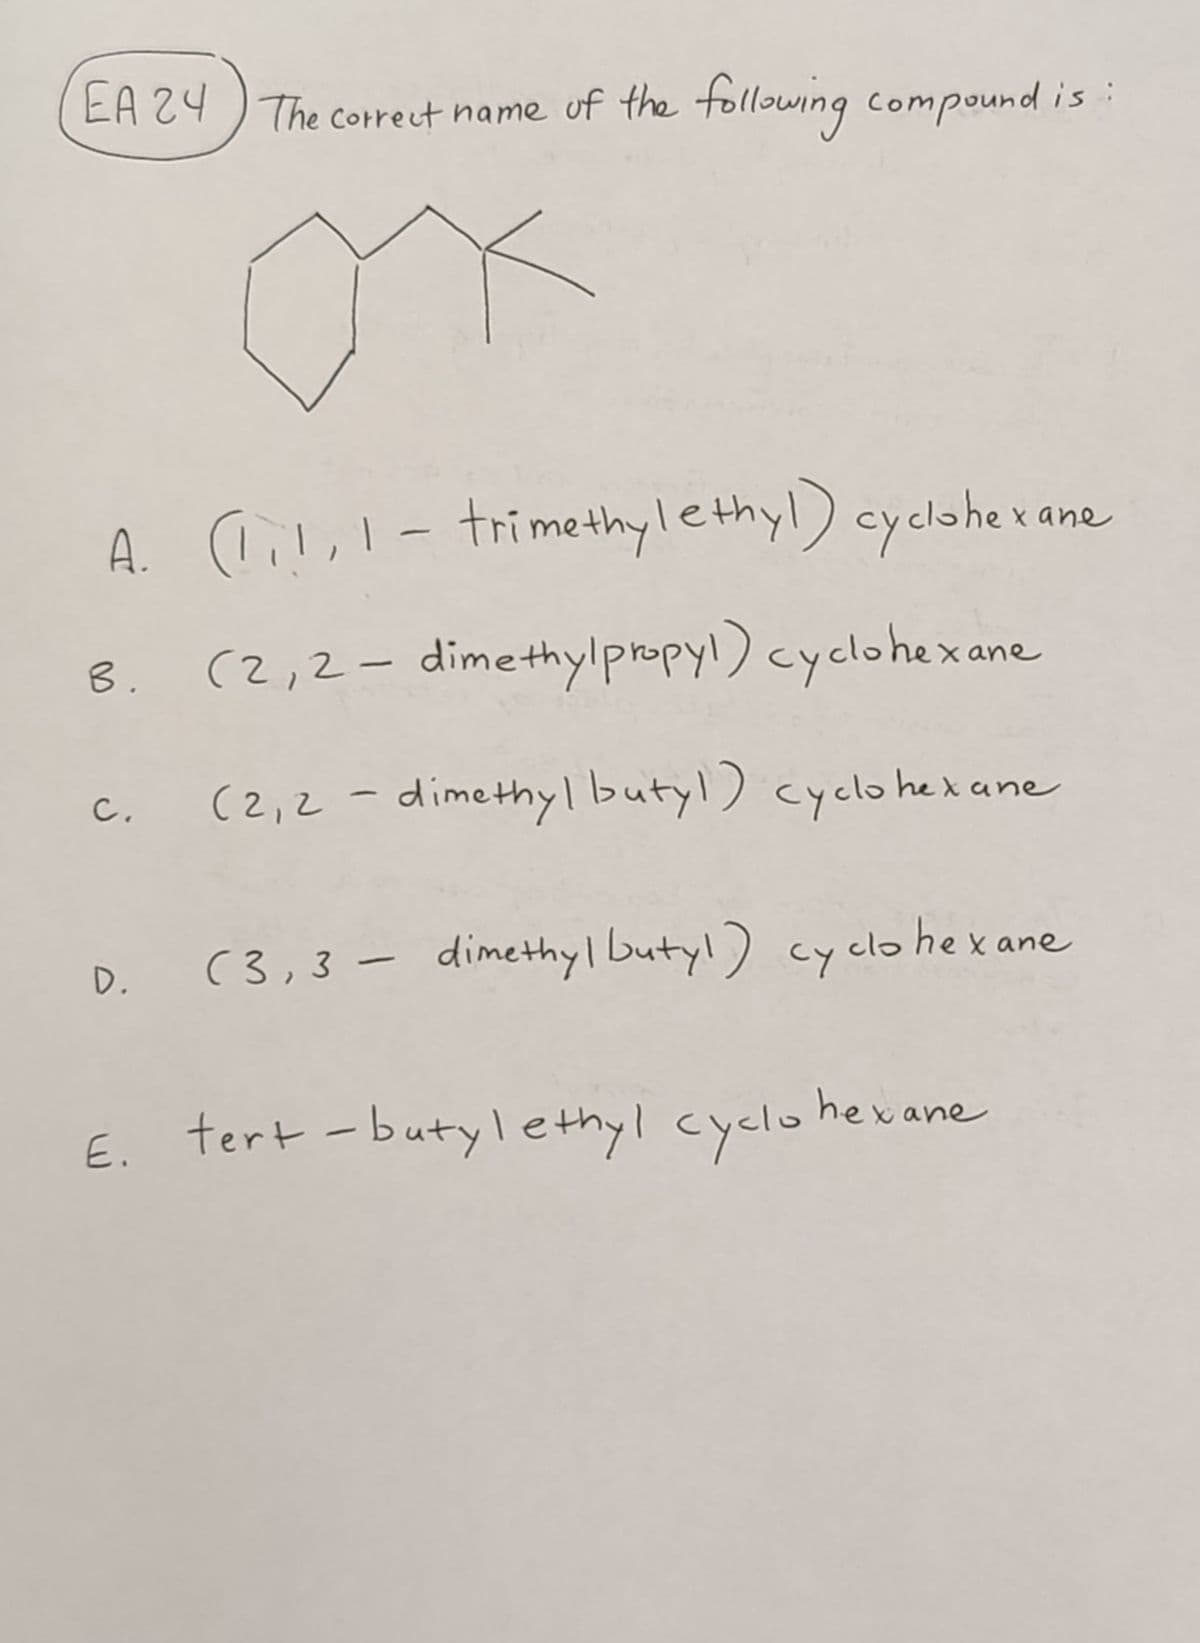 EA 24 The correct name of the following compound is
ox
A. (1₁!, 1- trimethylethyl) cyclohe:
B. (2,2-dimethylpropyl) cyclohexane
c. (2,2-dimethyl butyl) cyclohexane
D. (3,3- dimethyl butyl) cyclohexane
E. tert-butylethyl cyclohexane